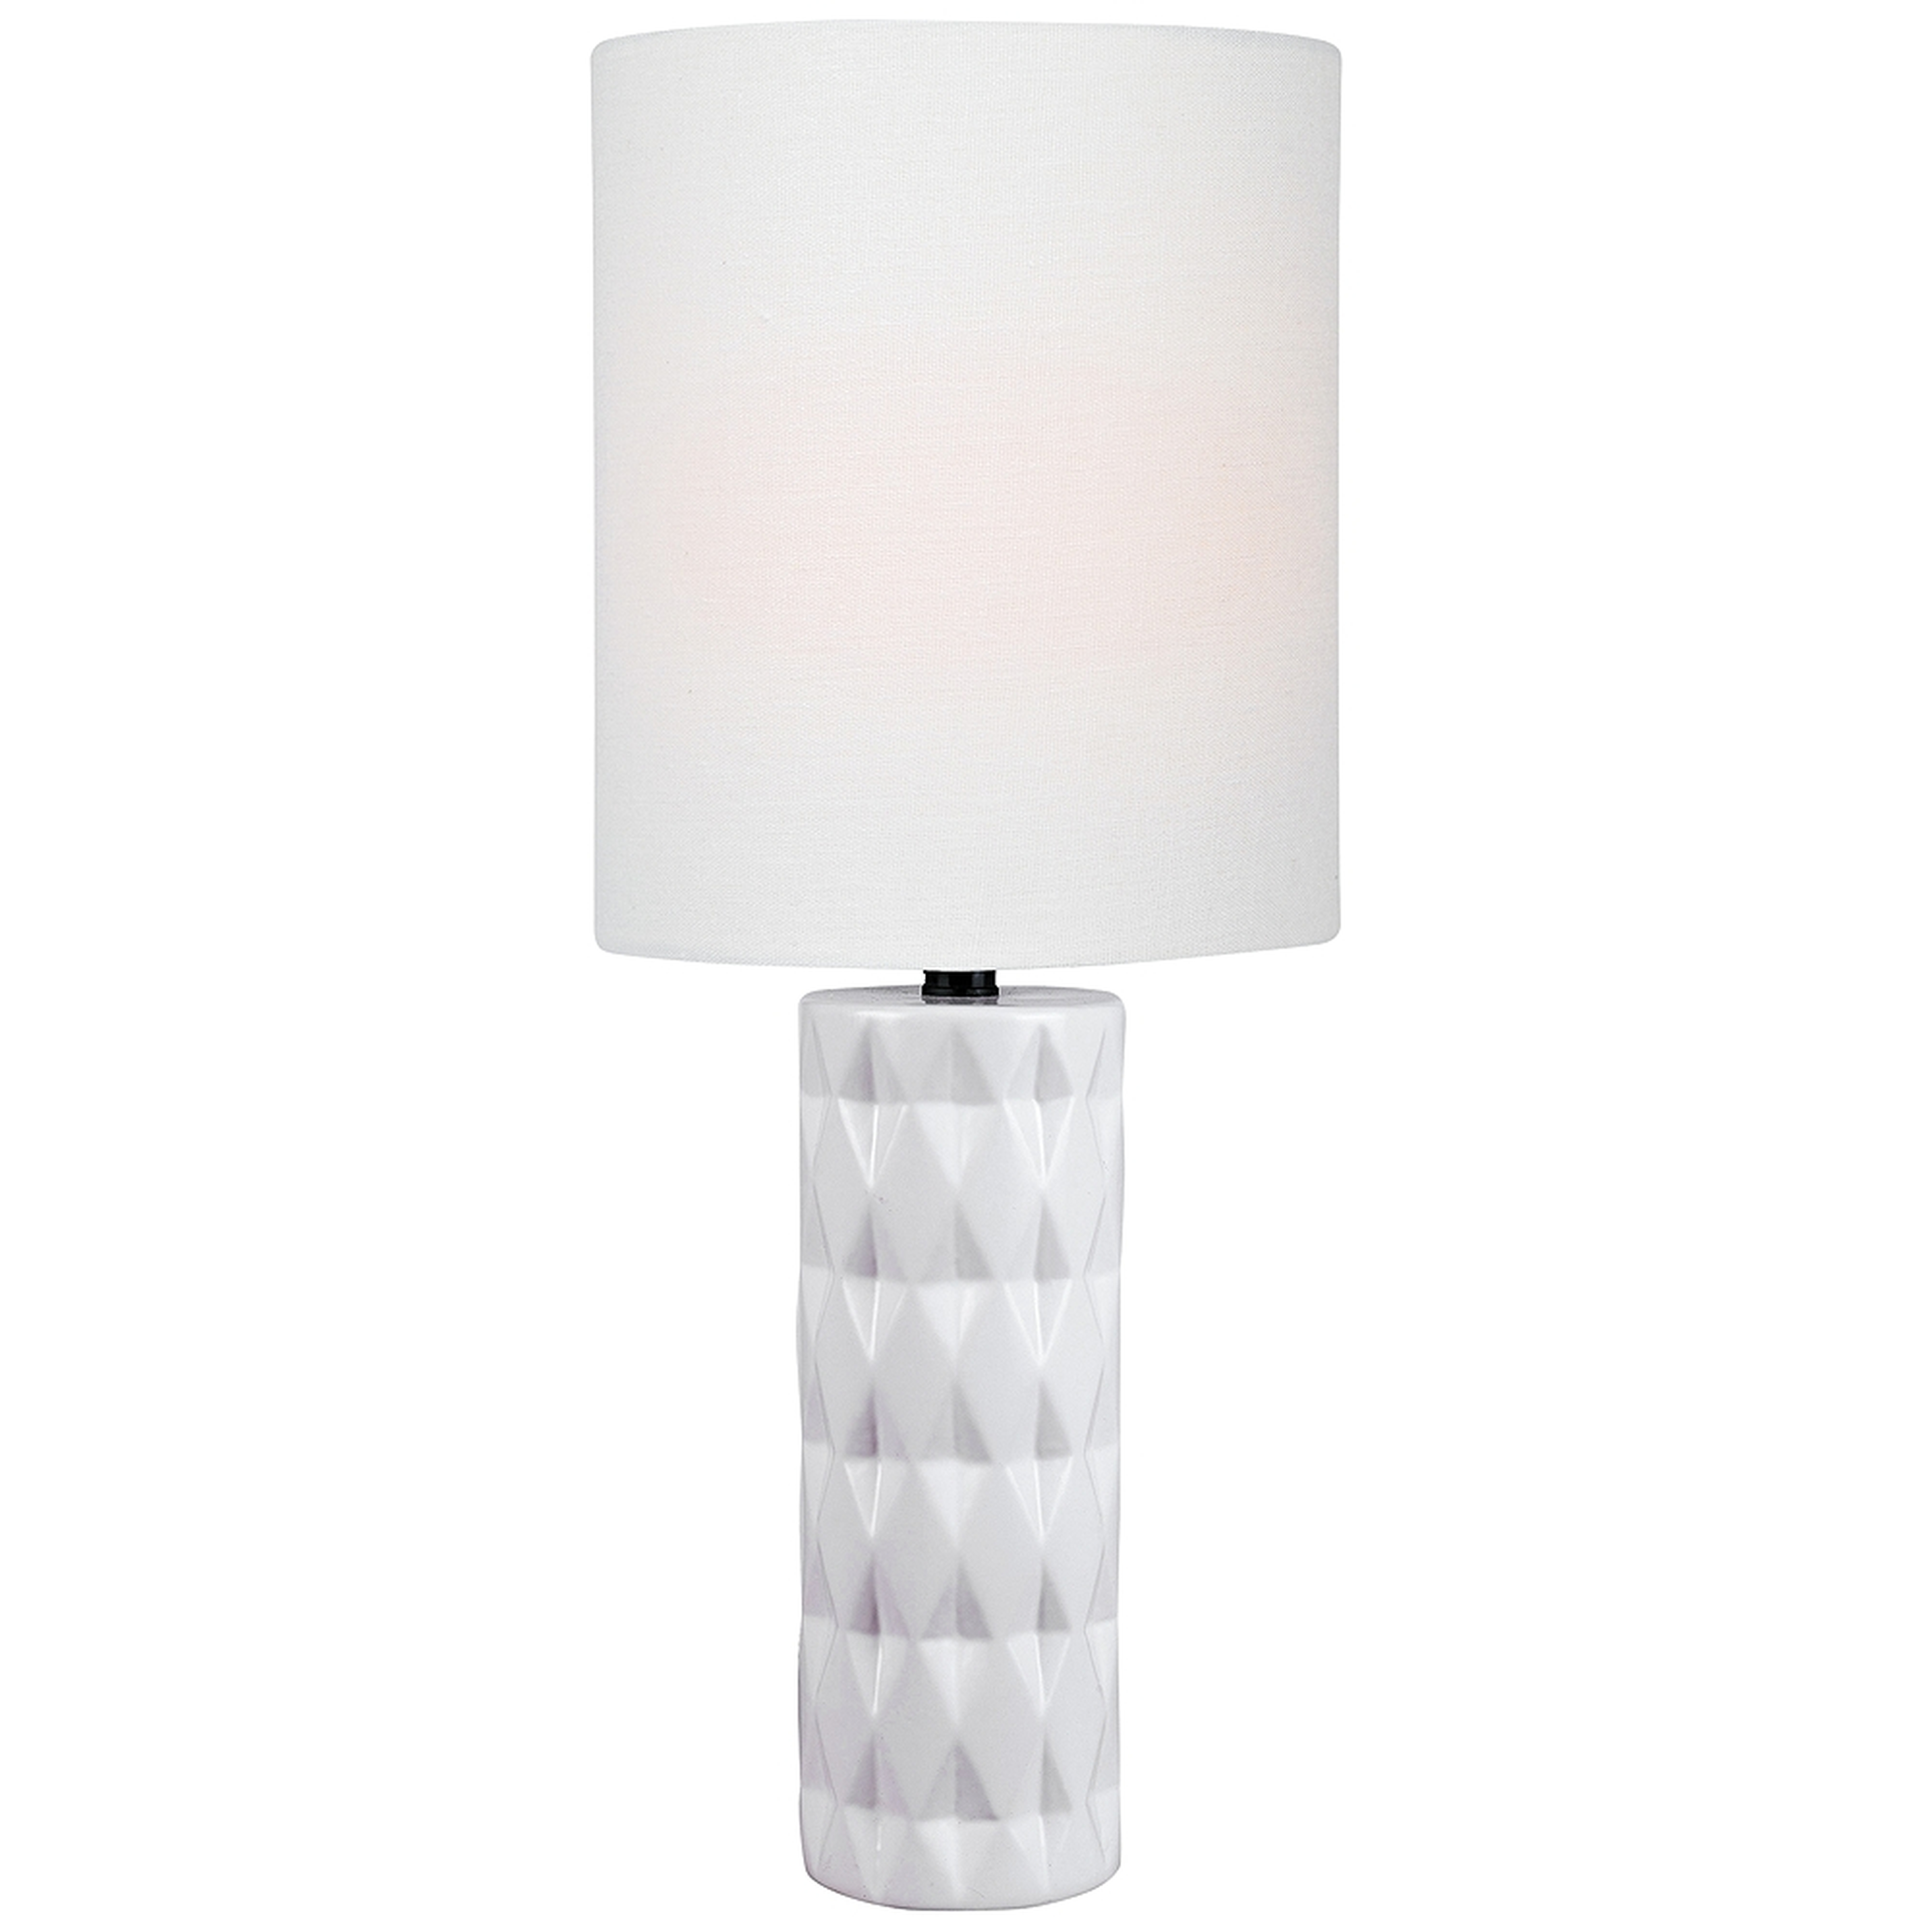 Lite Source Delta White Ceramic Table Lamp - Style # 56J73 - Lamps Plus